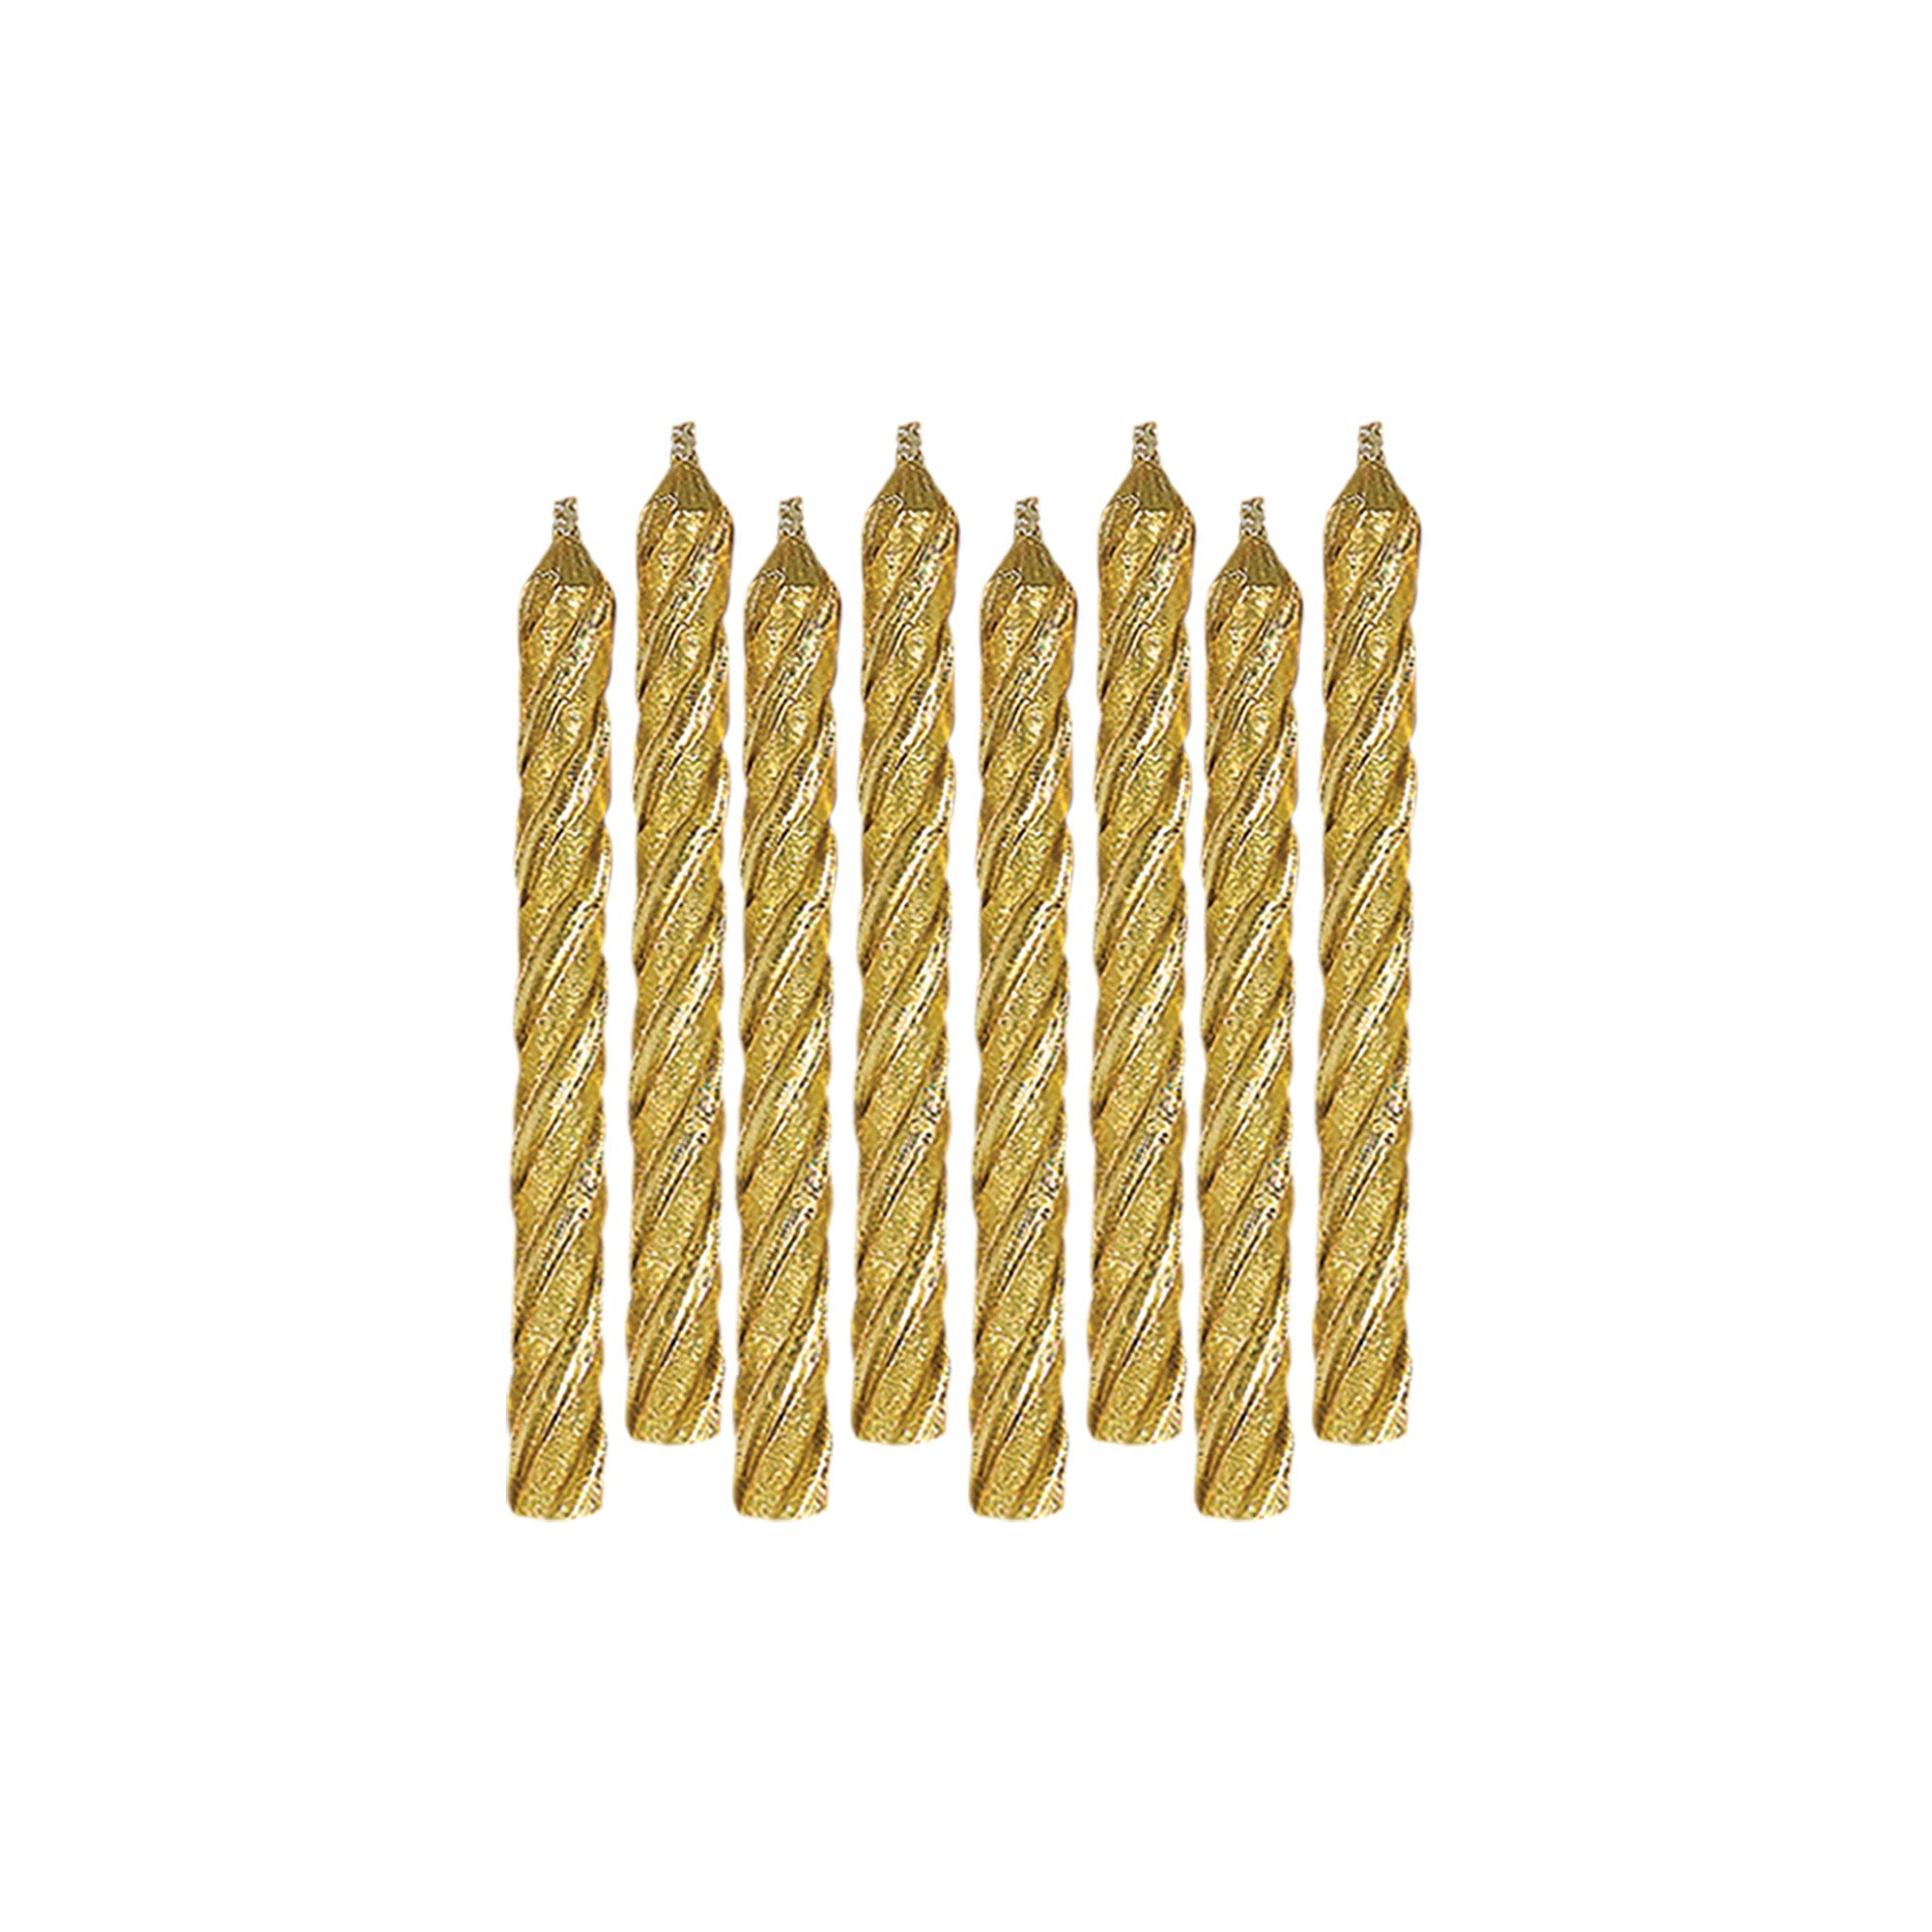 12 Large Spiral Candles Metallic  Gold  3.25in